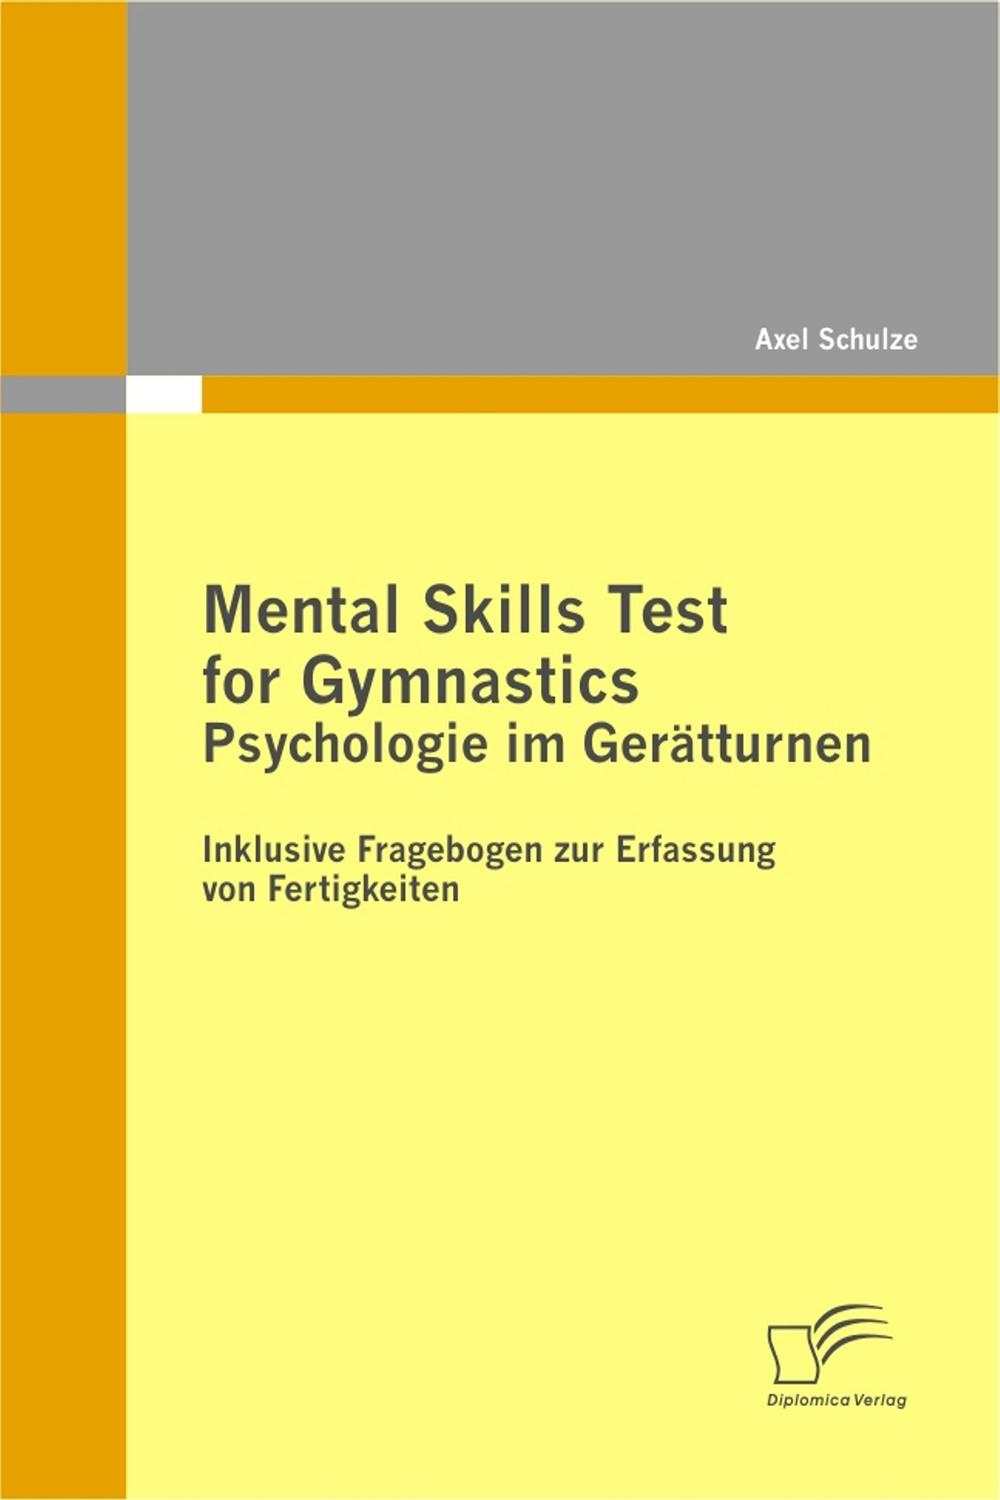 Mental Skills Test for Gymnastics: Psychologie im Gerätturnen - Axel Schulze